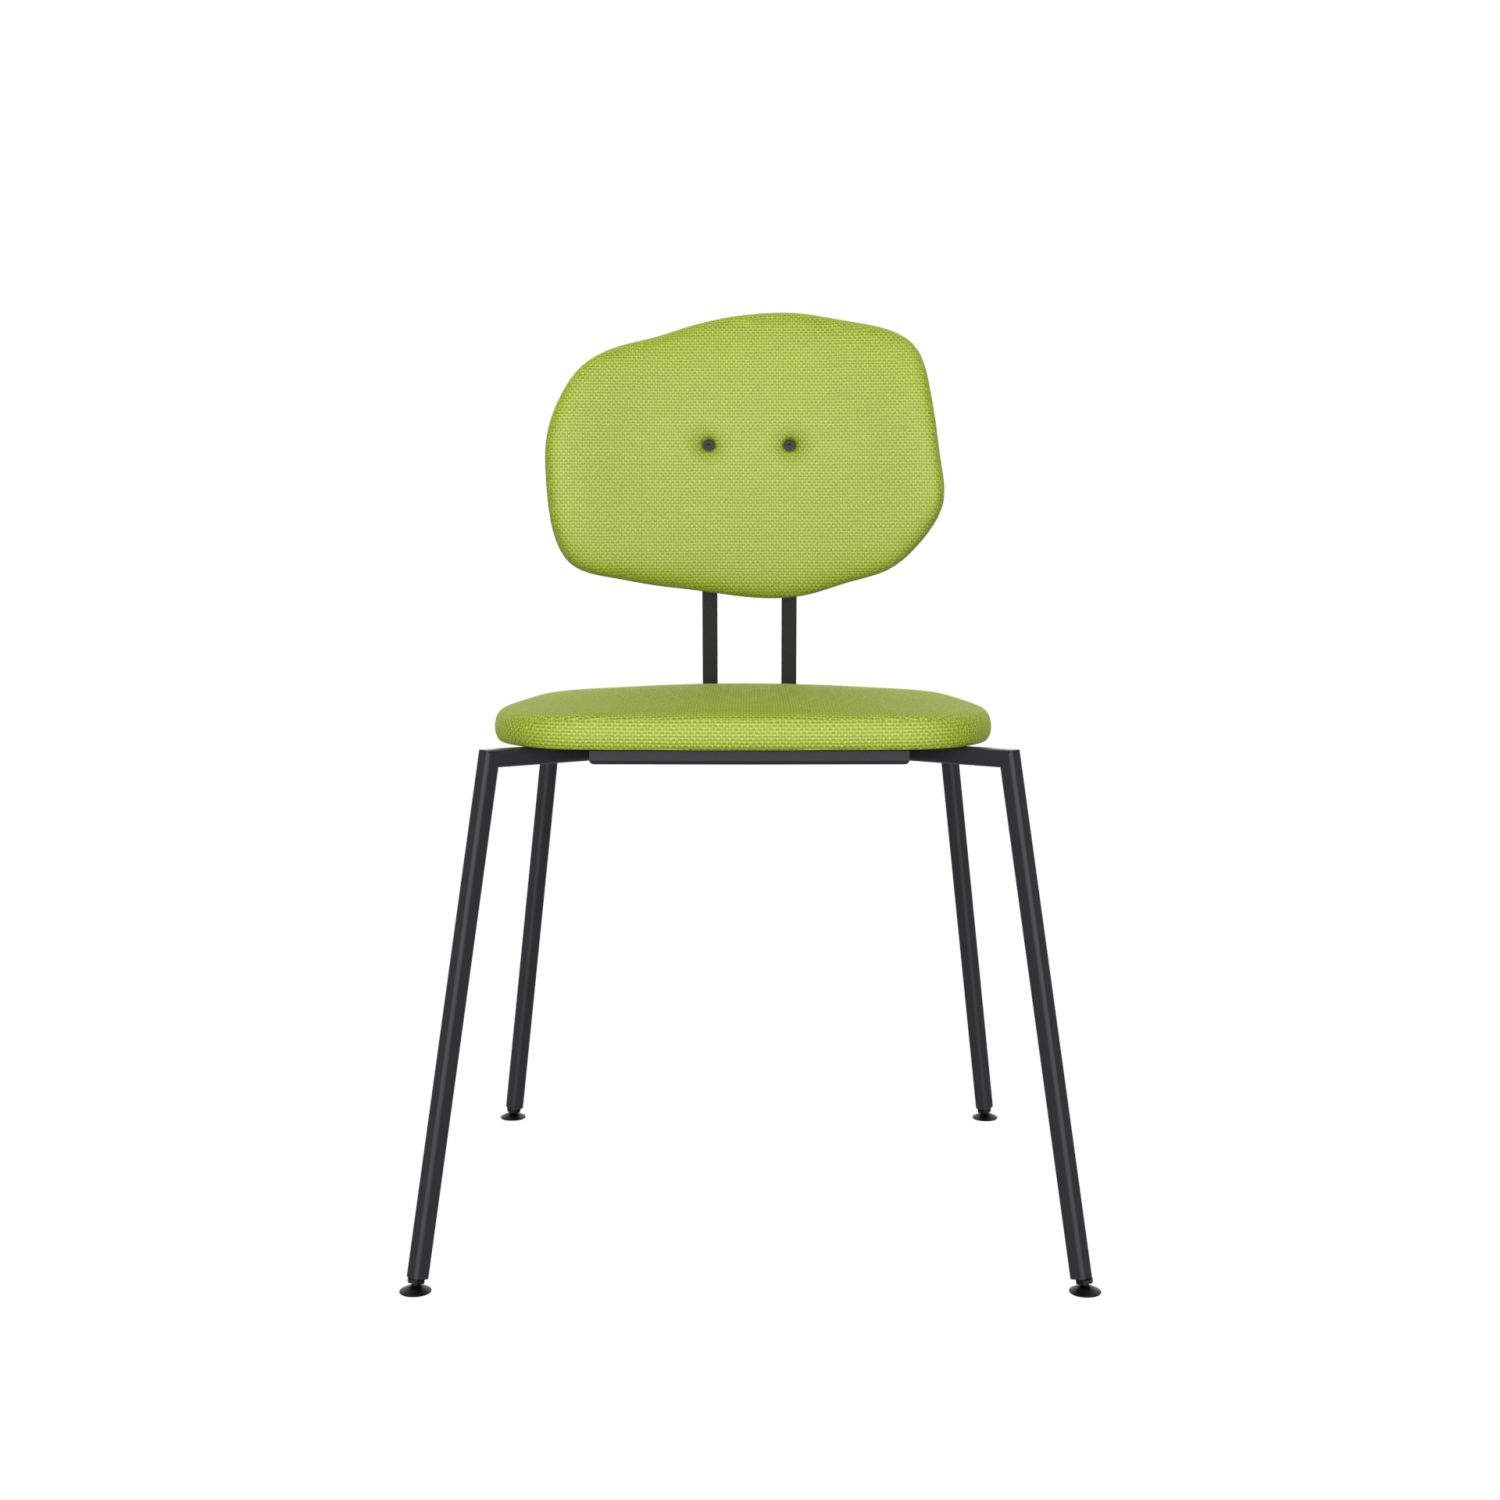 lensvelt maarten baas chair 141 stackable without armrests backrest e fairway green 020 black ral9005 hard leg ends